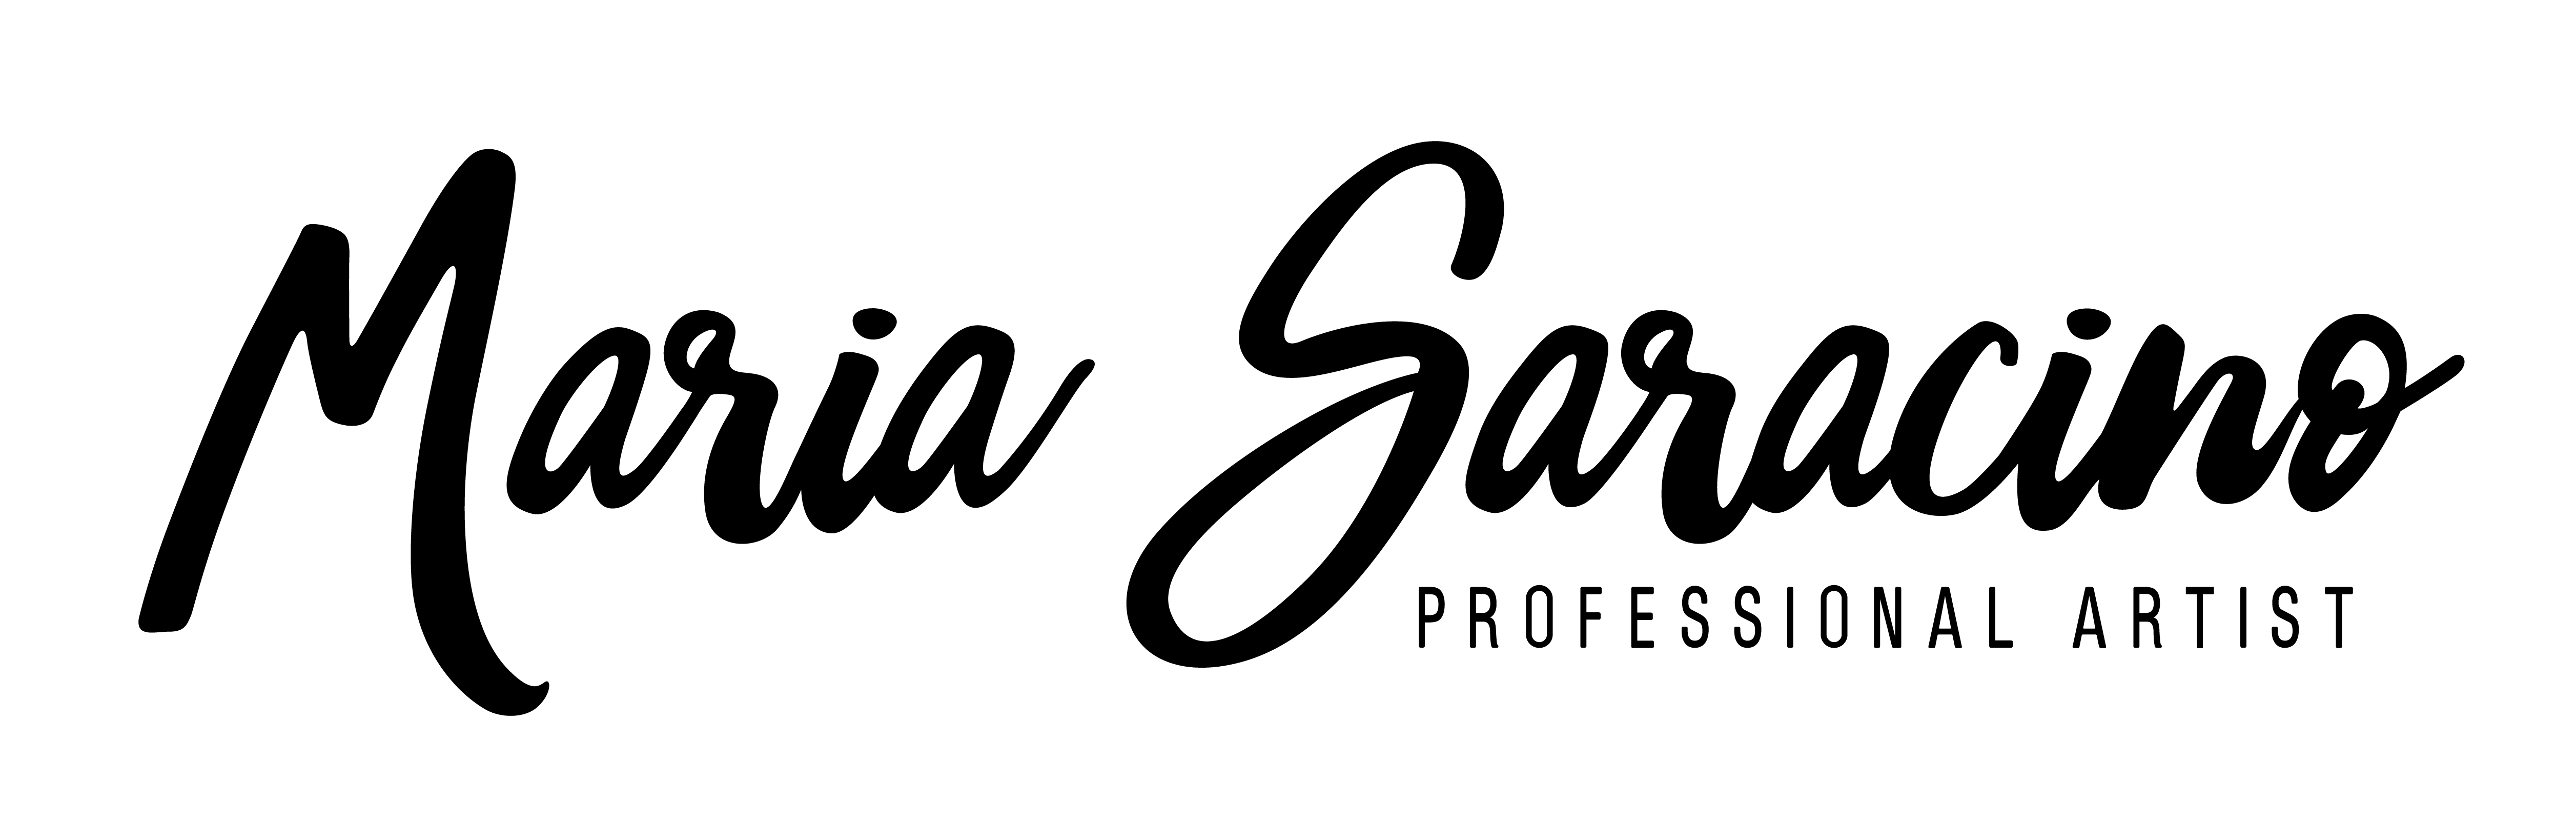 Maria Saracino new logo | MariaSaracino's Blog